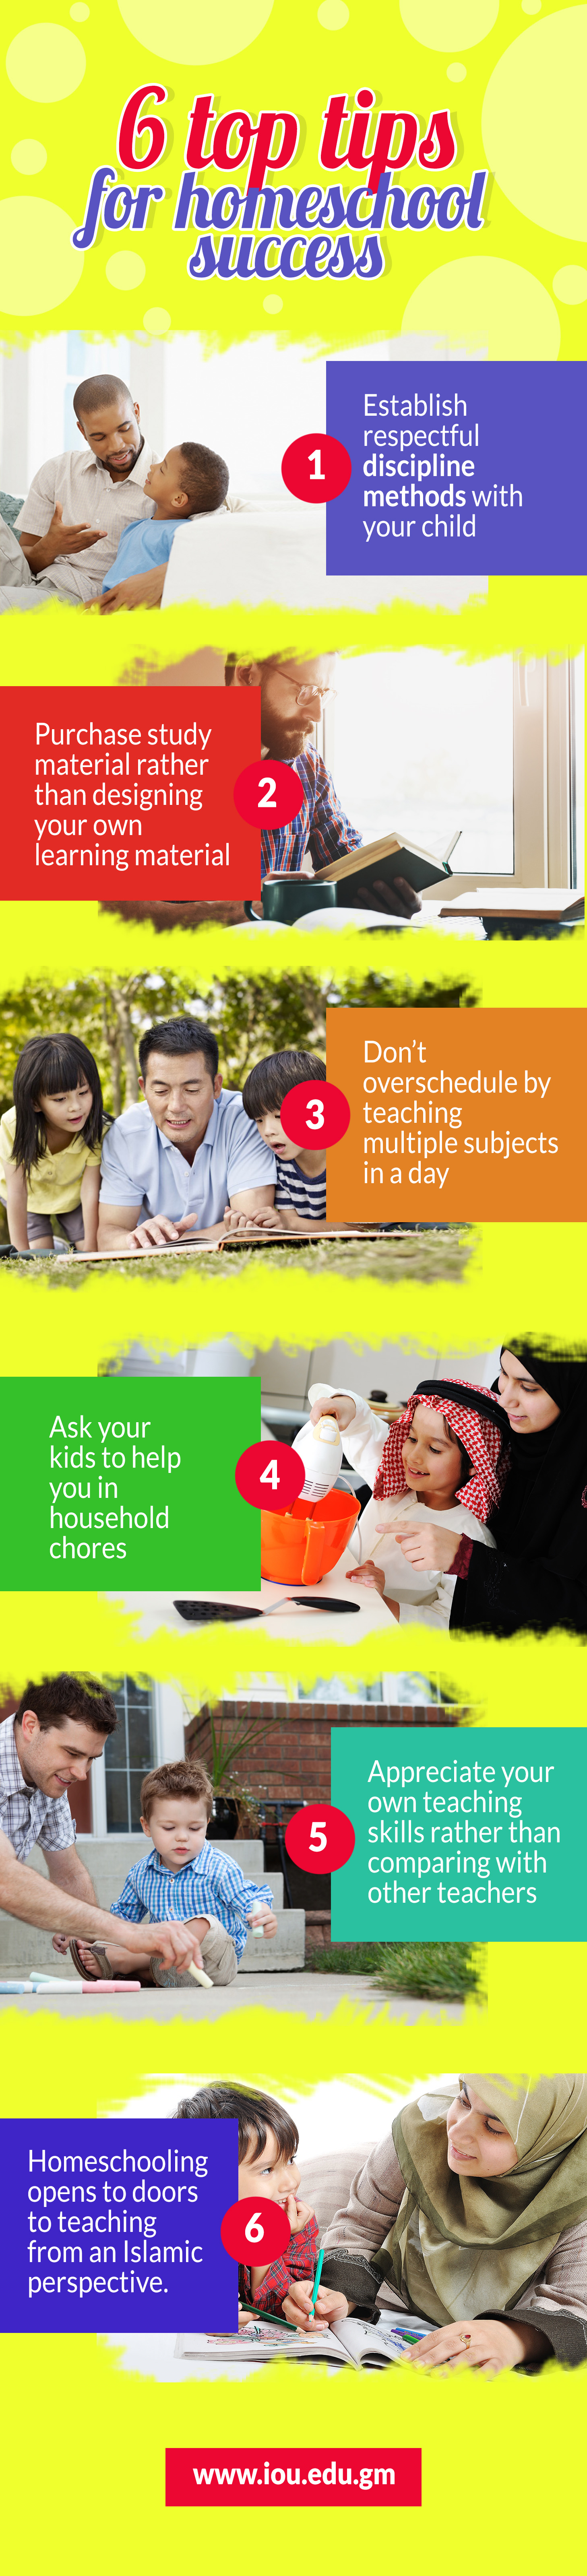 6 top tips for homeschool success-inside poster